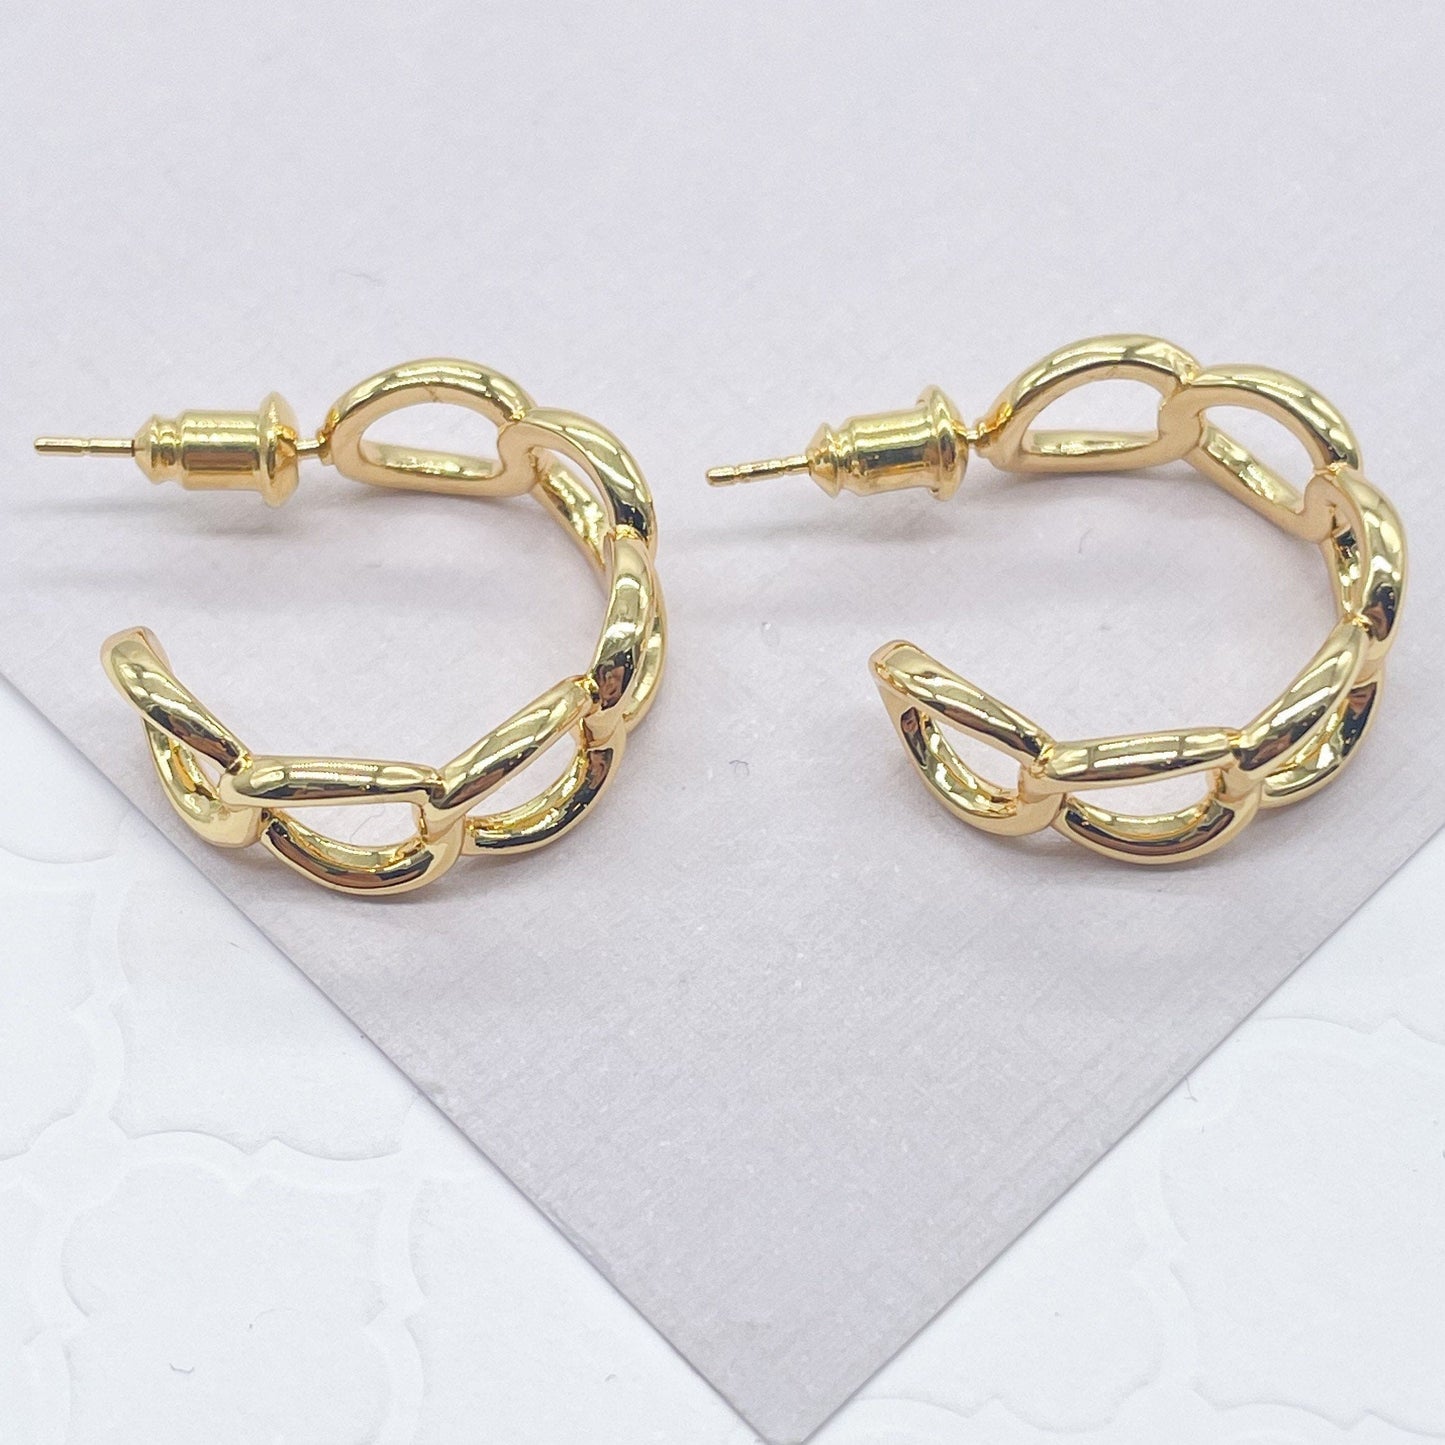 18k Gold Layered Open Hoop Link Earring, Cuban Curb Link Chain Earrings Wholesale